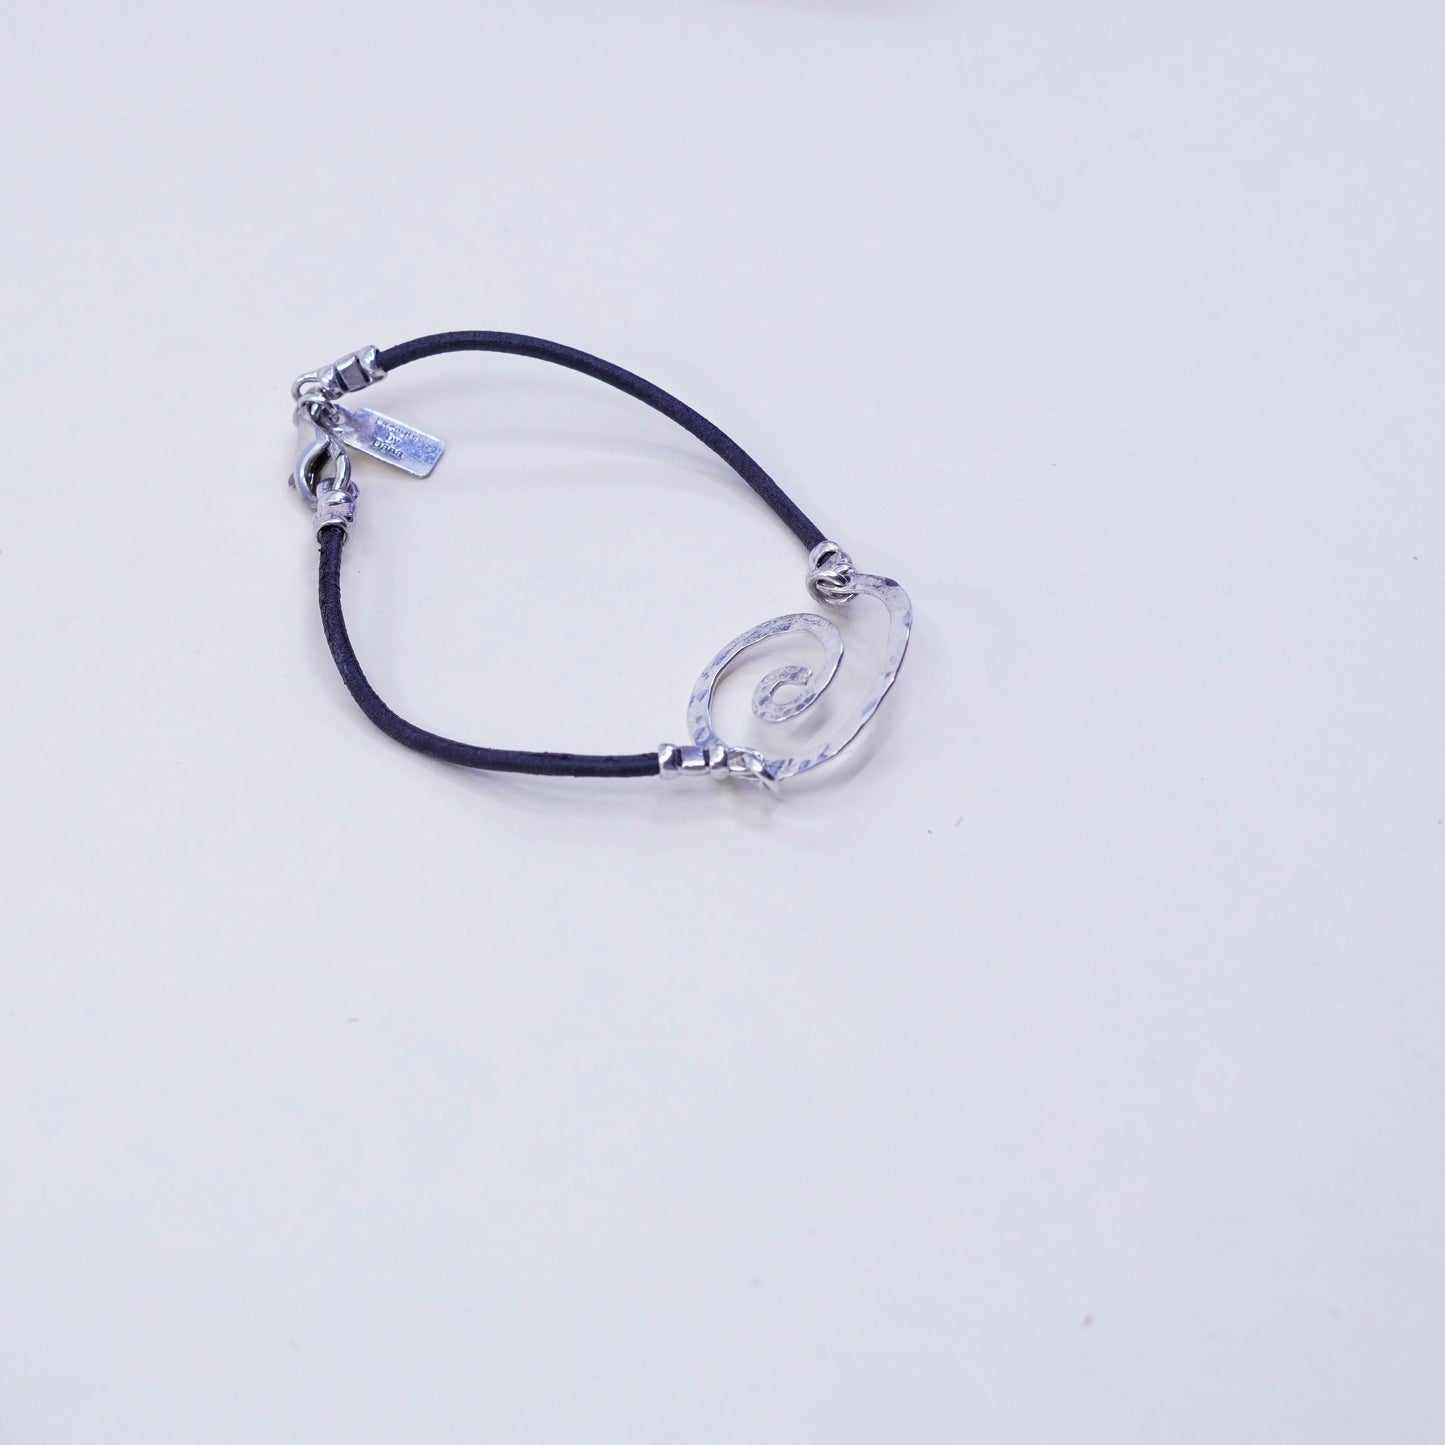 6”, Vintage Dana Sterling silver handmade bracelet, 925 hammered swirl leather